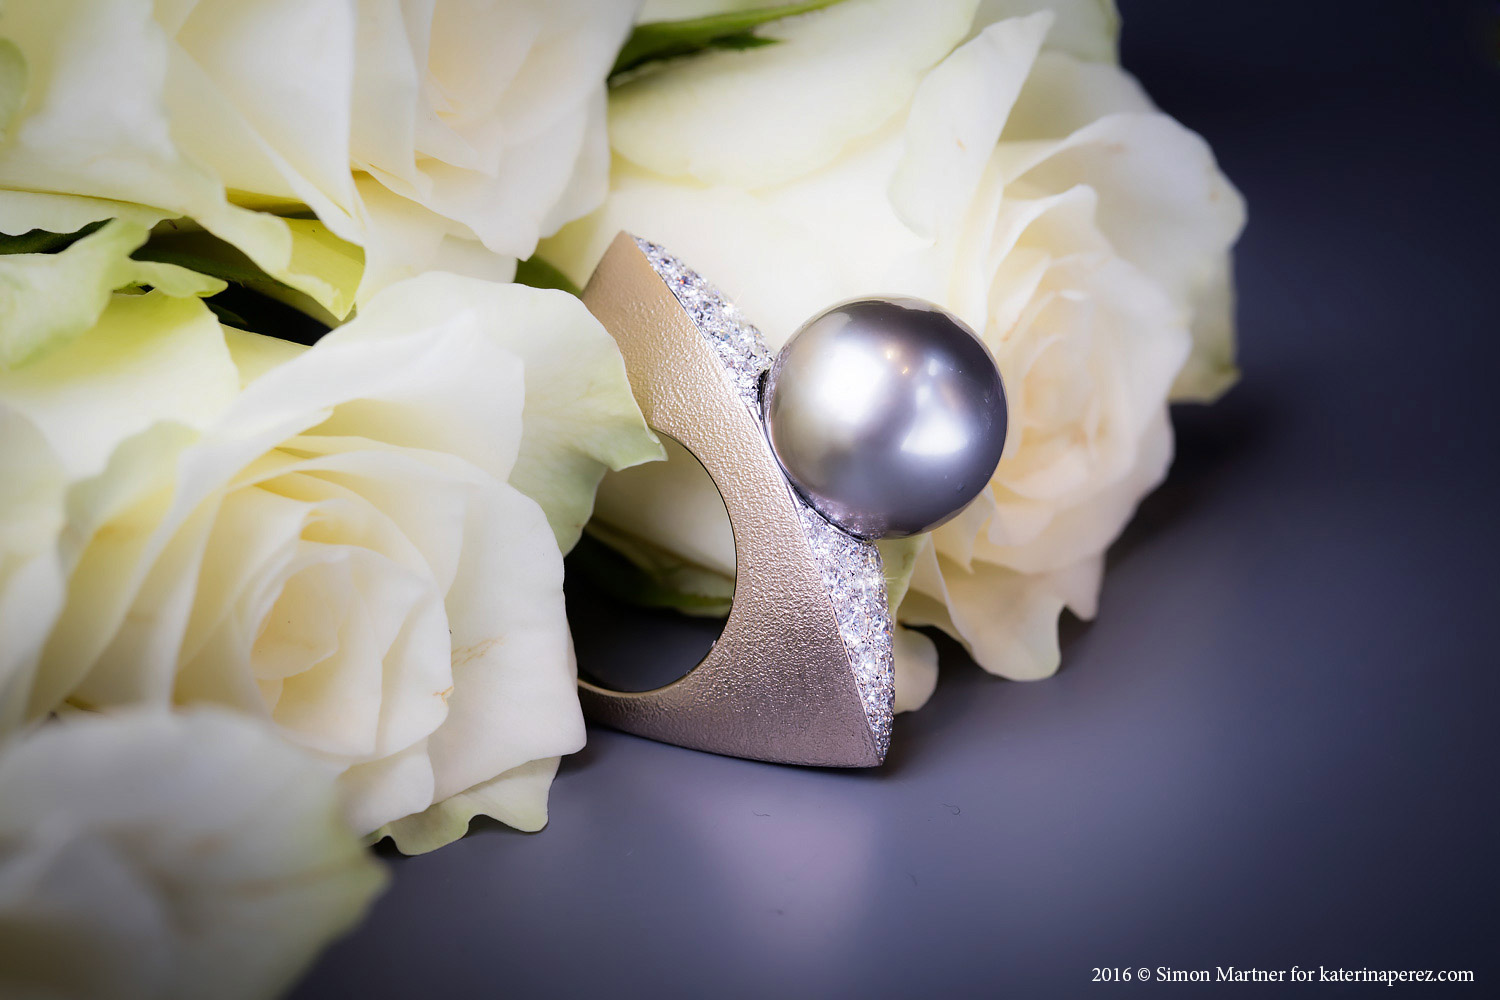 Кольцо Baer Jewels с жемчужиной и бриллиантами 1.5 карата в белом золоте — £9.360